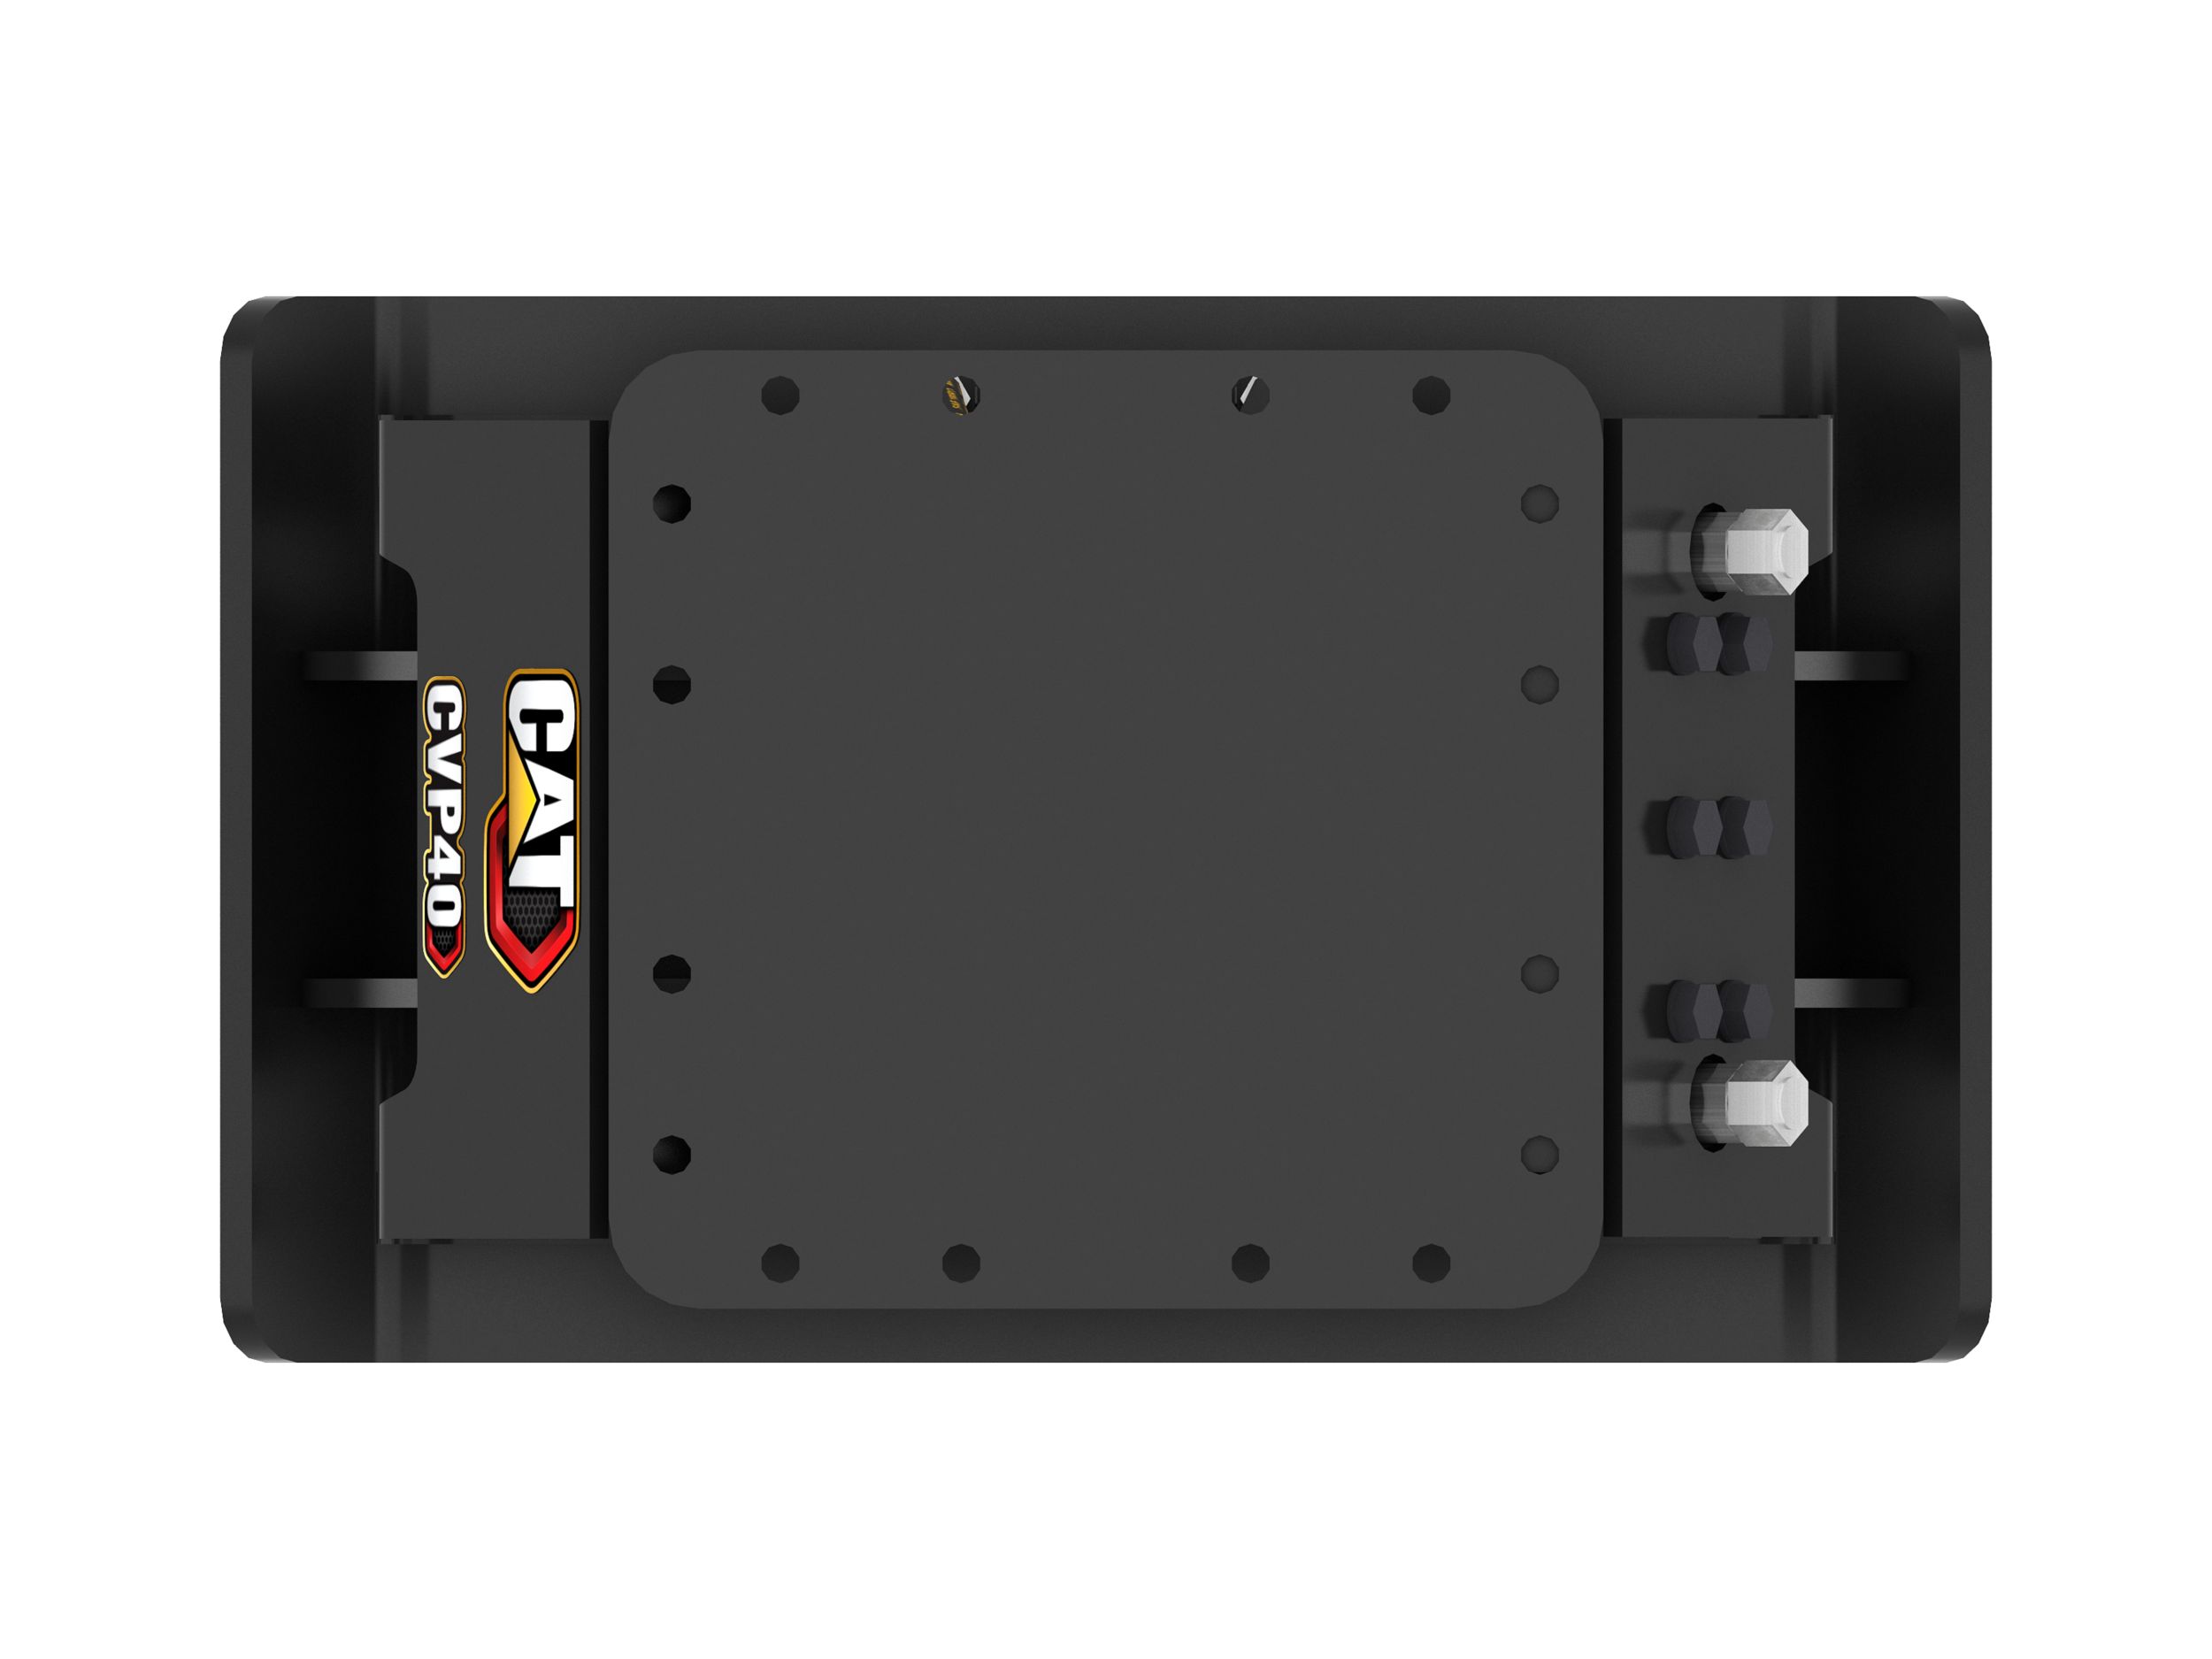 CVP40 Vibratory Plate Compactor